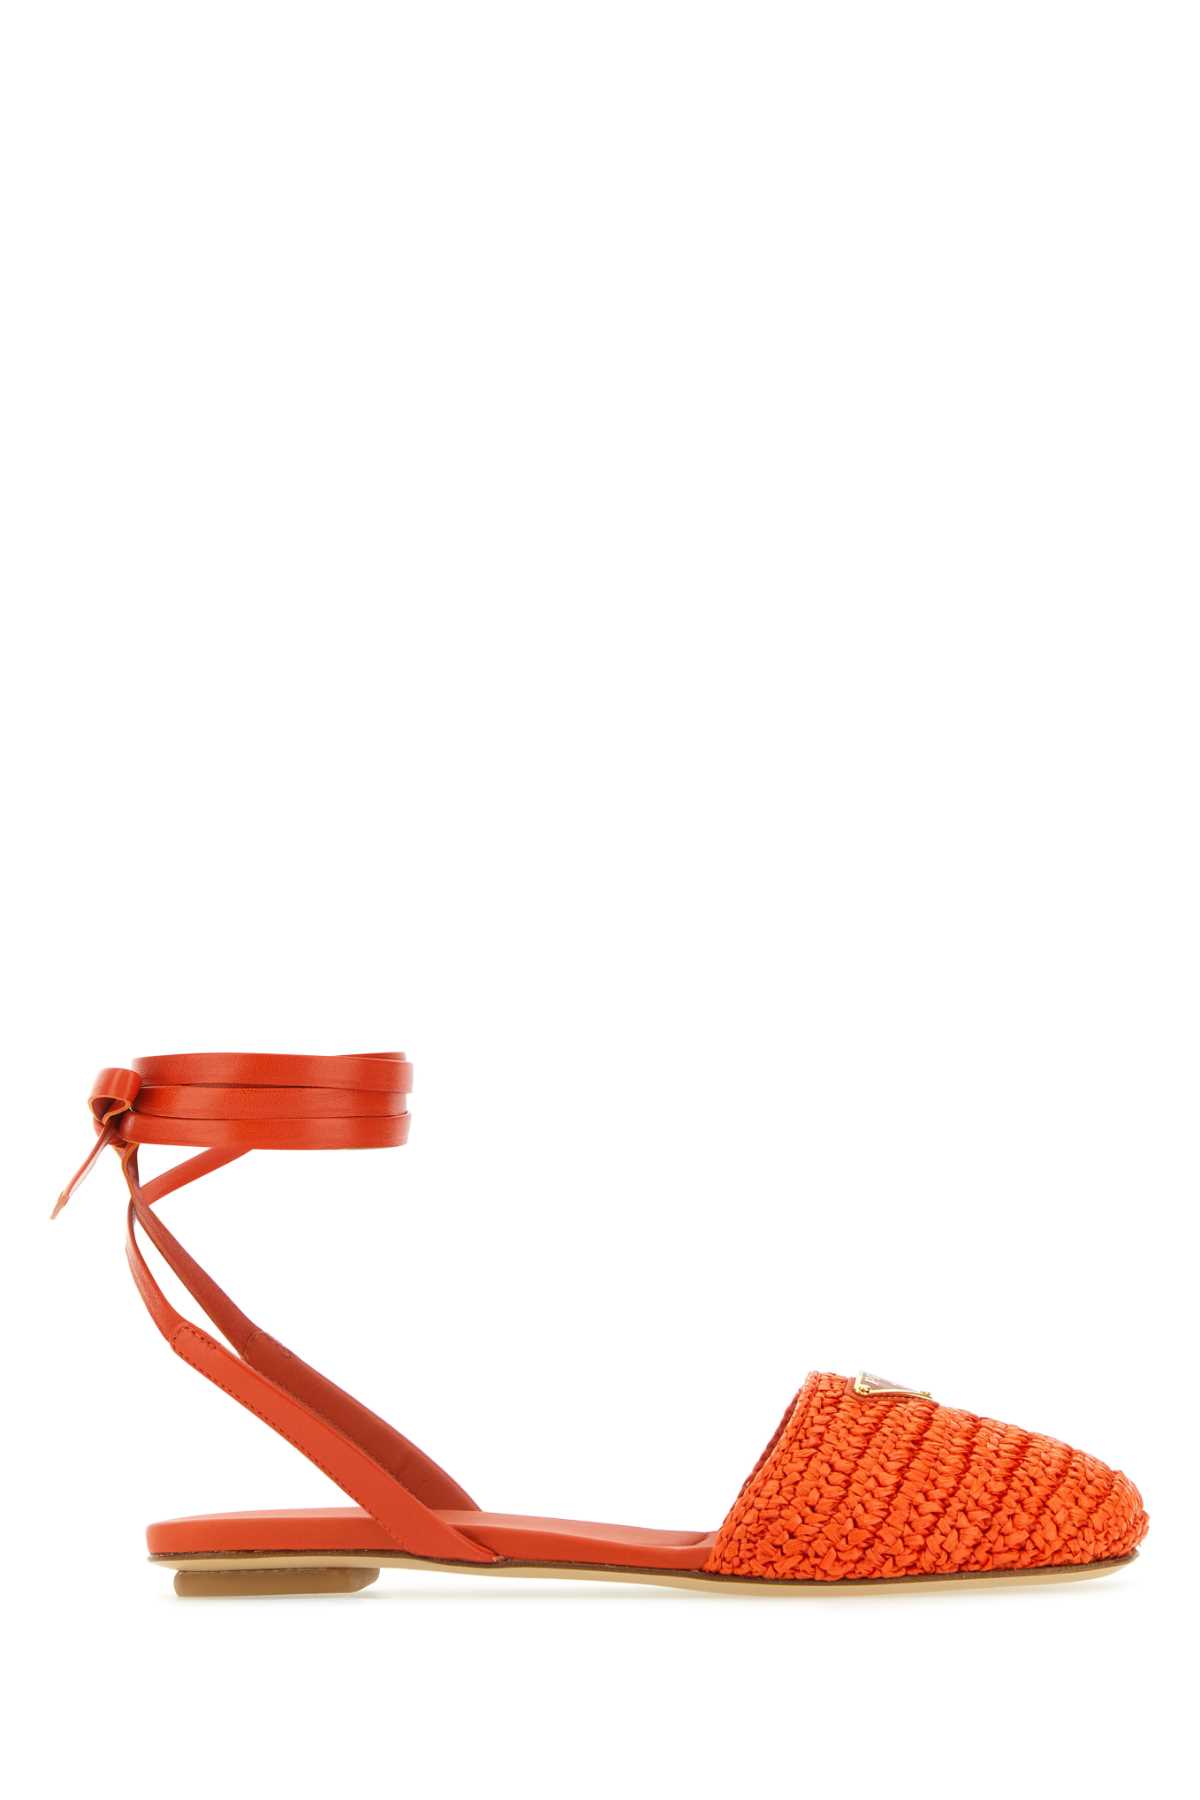 Prada Orange Raffia Sandals